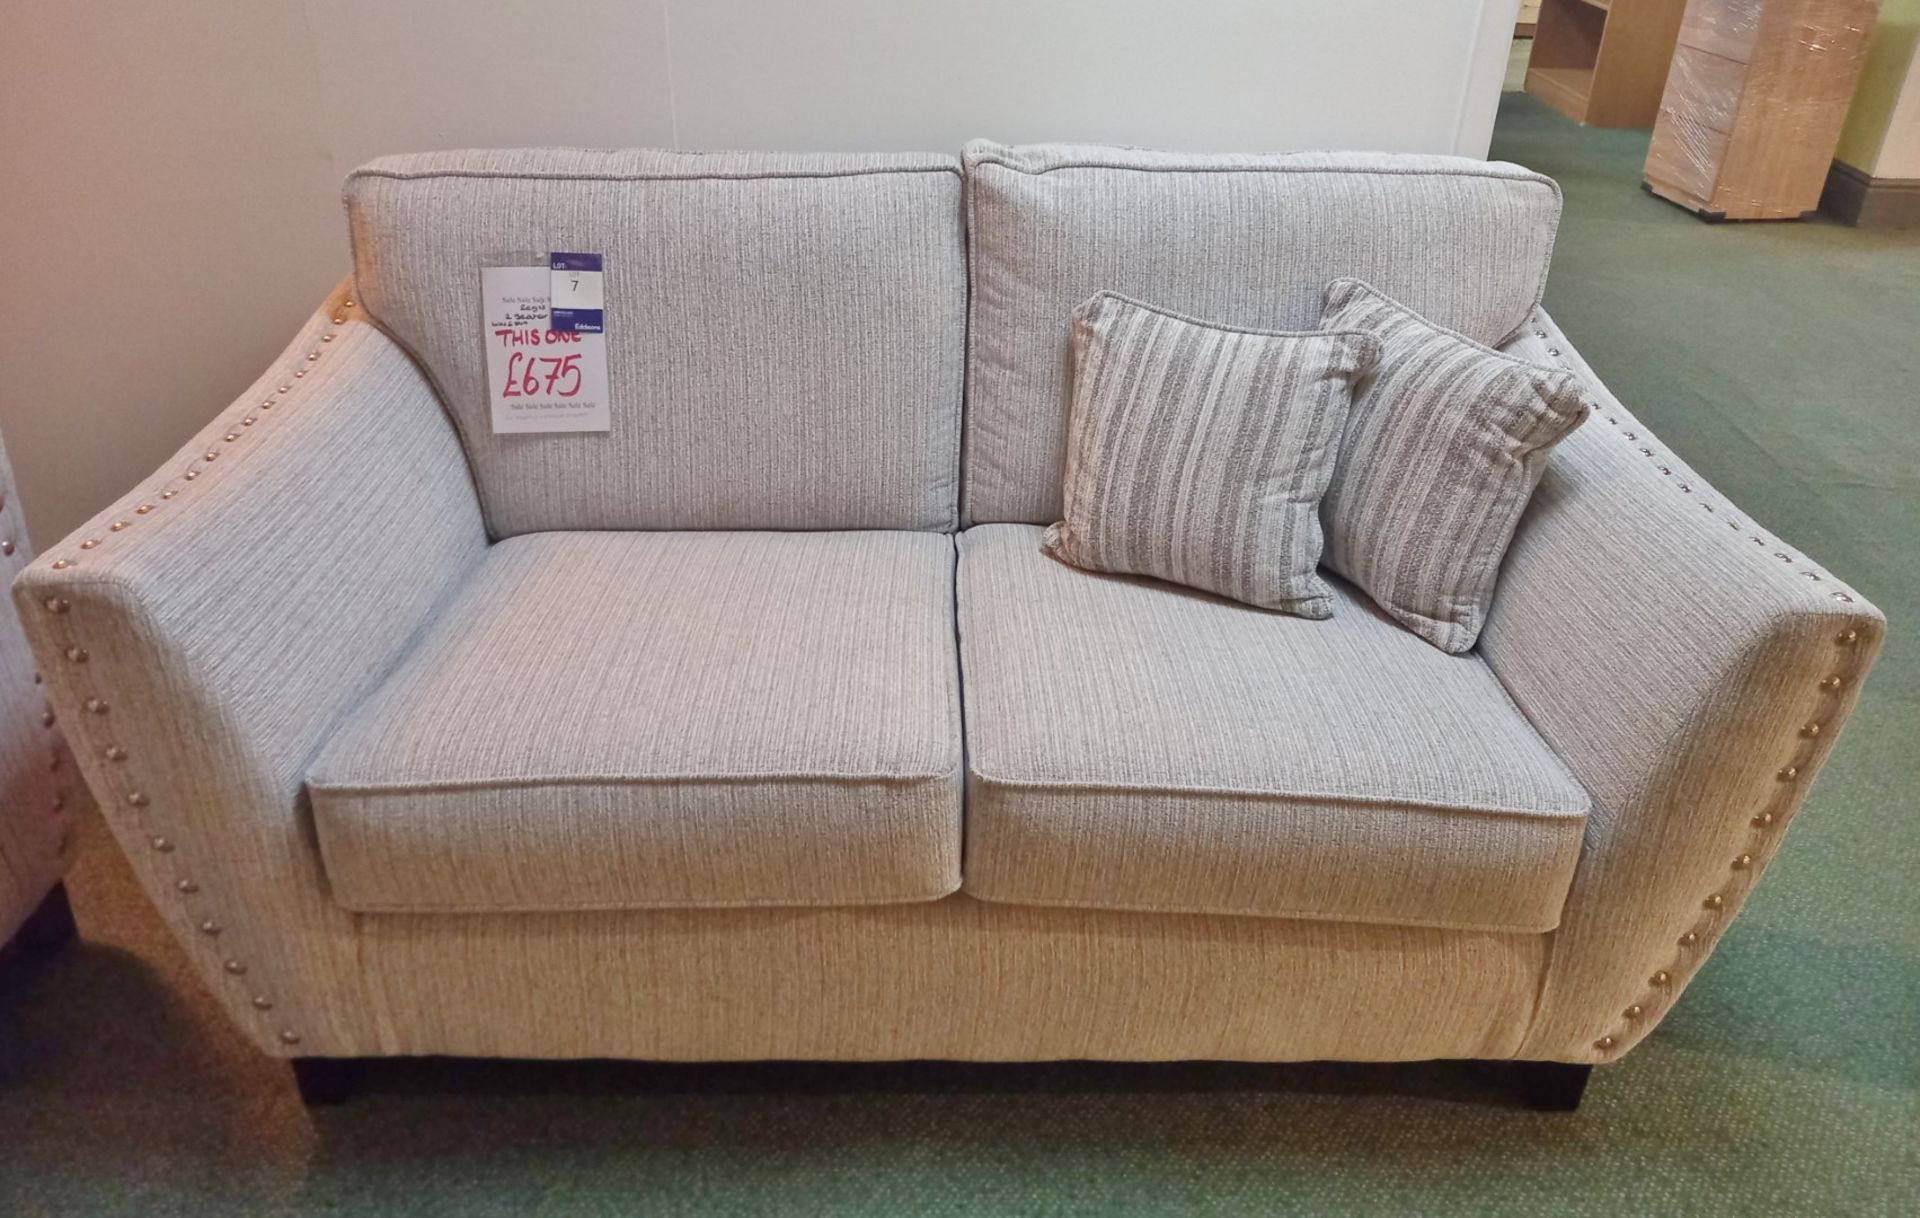 Regis 2-Seater Sofa Rrp. £675 - Image 3 of 4